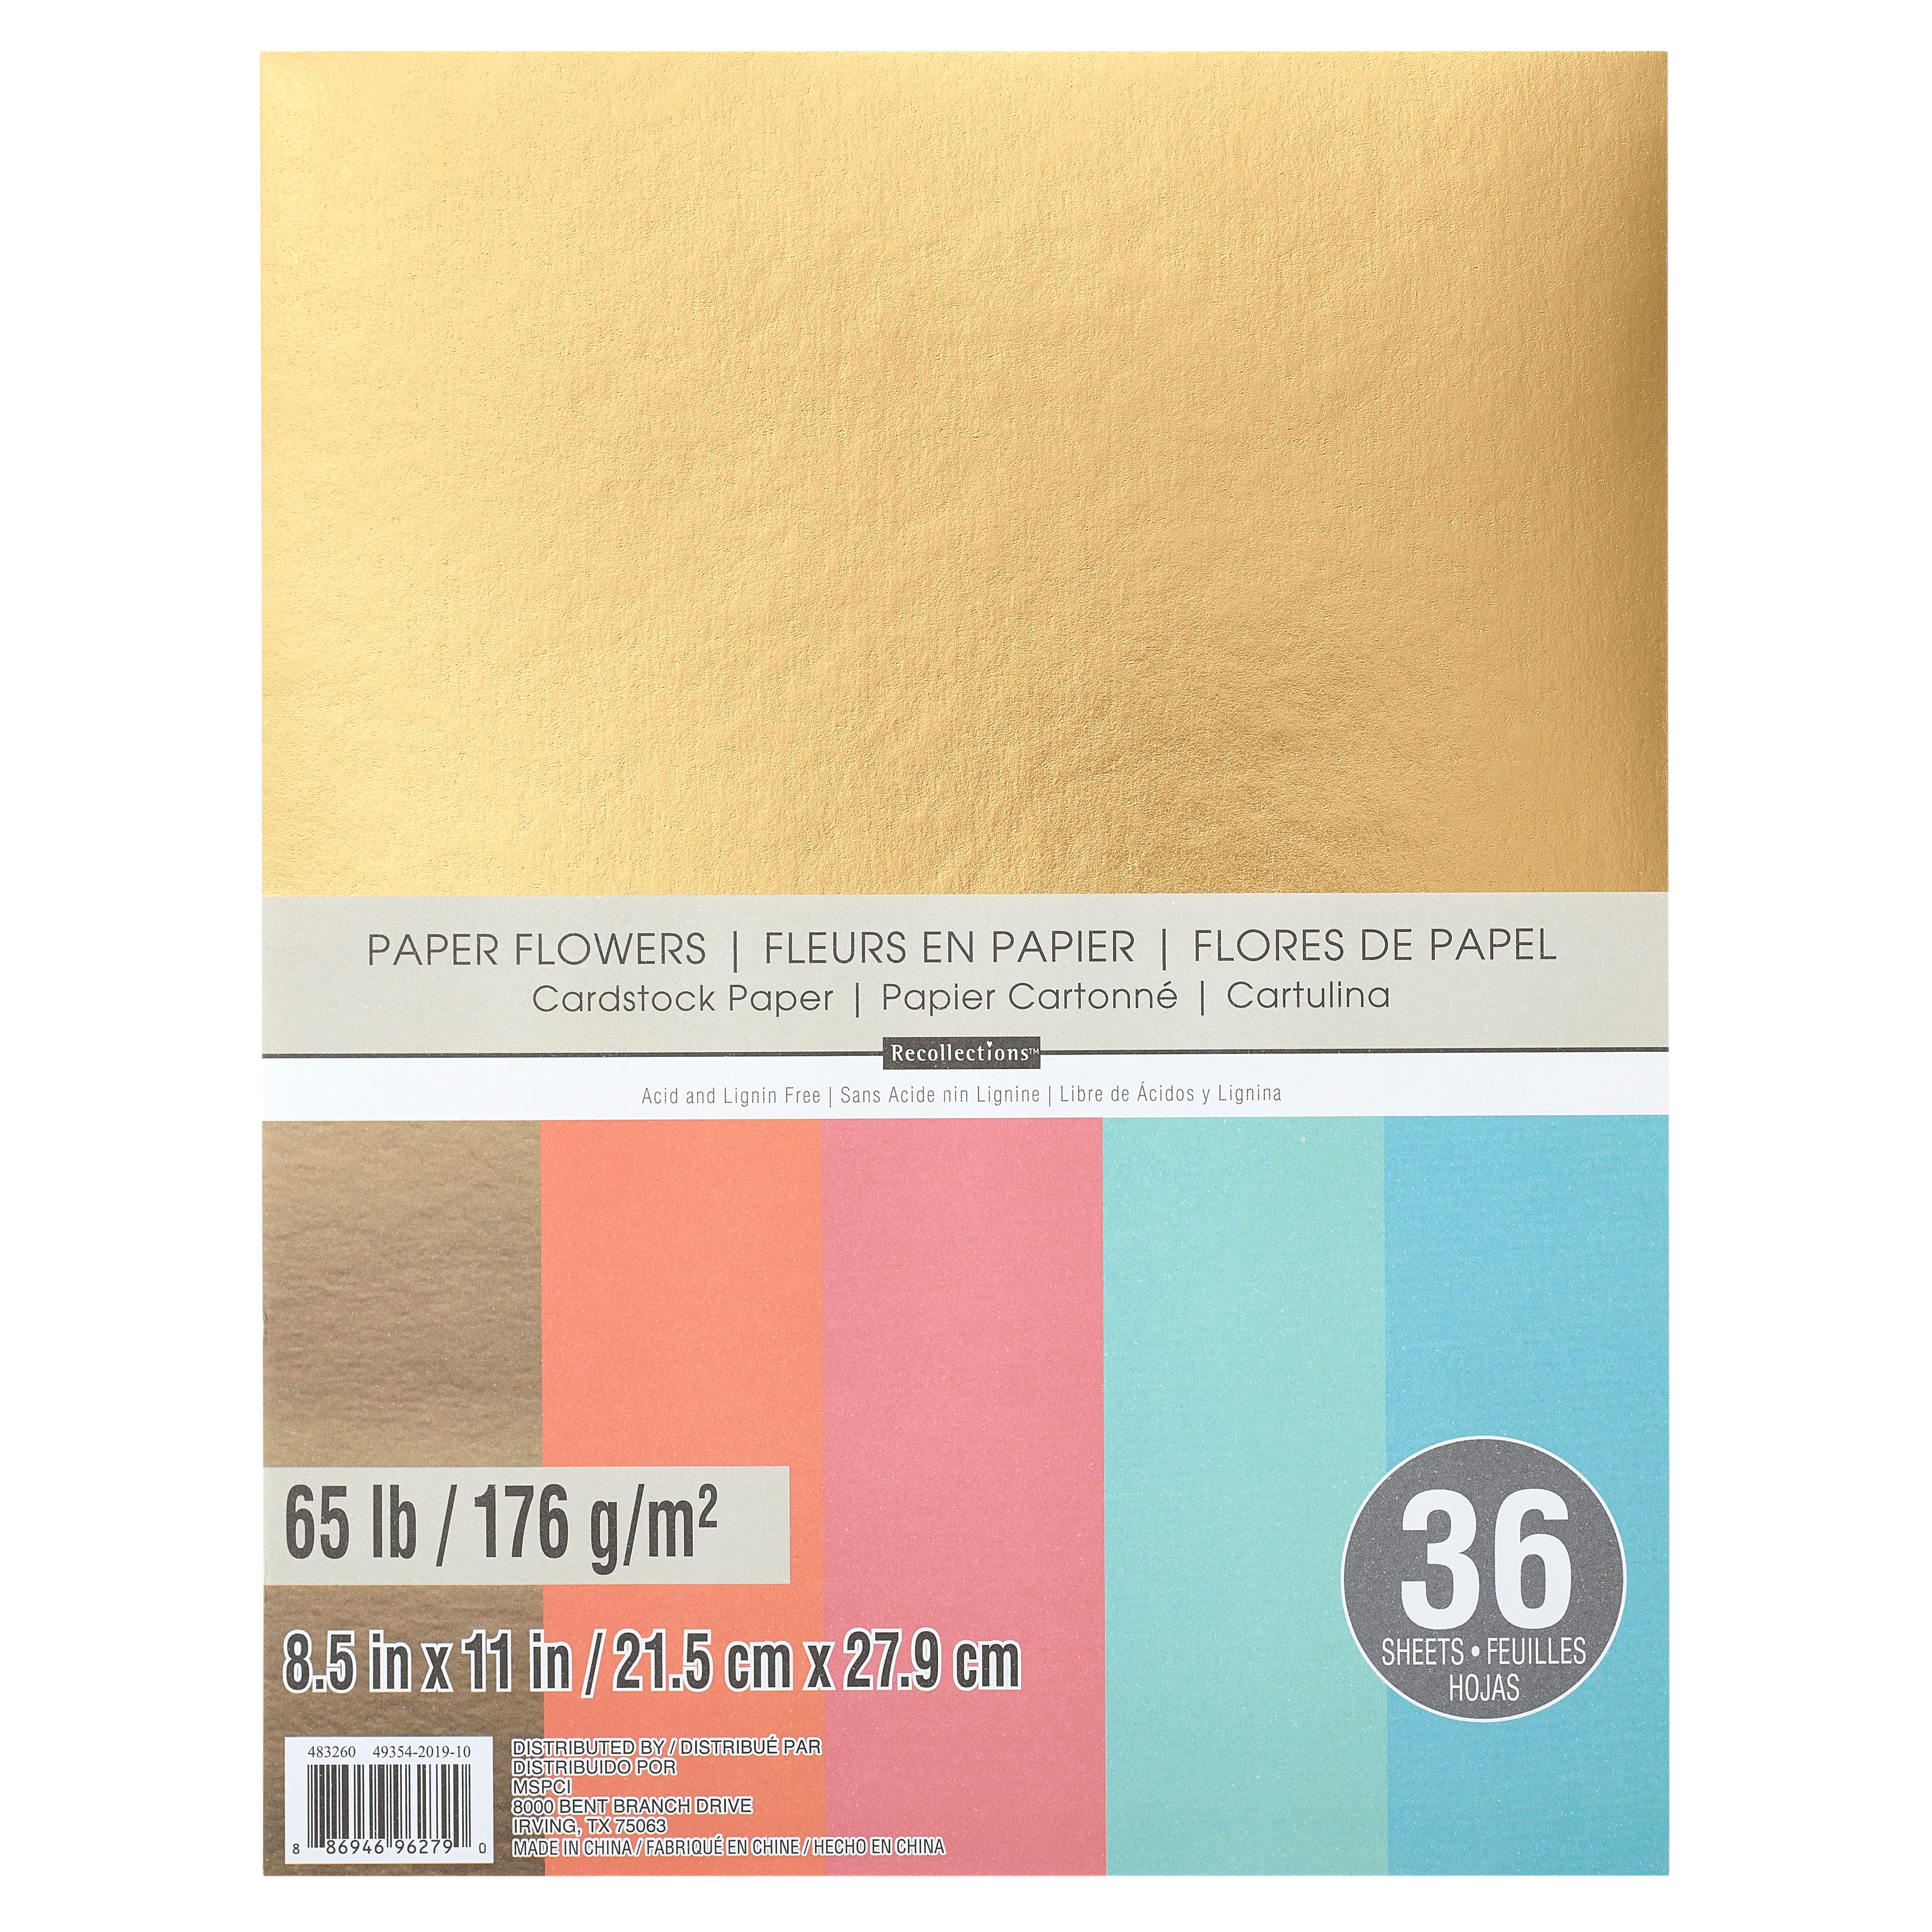 SALE!! 8.5 x 11 CARDSTOCK PAPER - FLORAL COLORS #3 - LOT OF 10